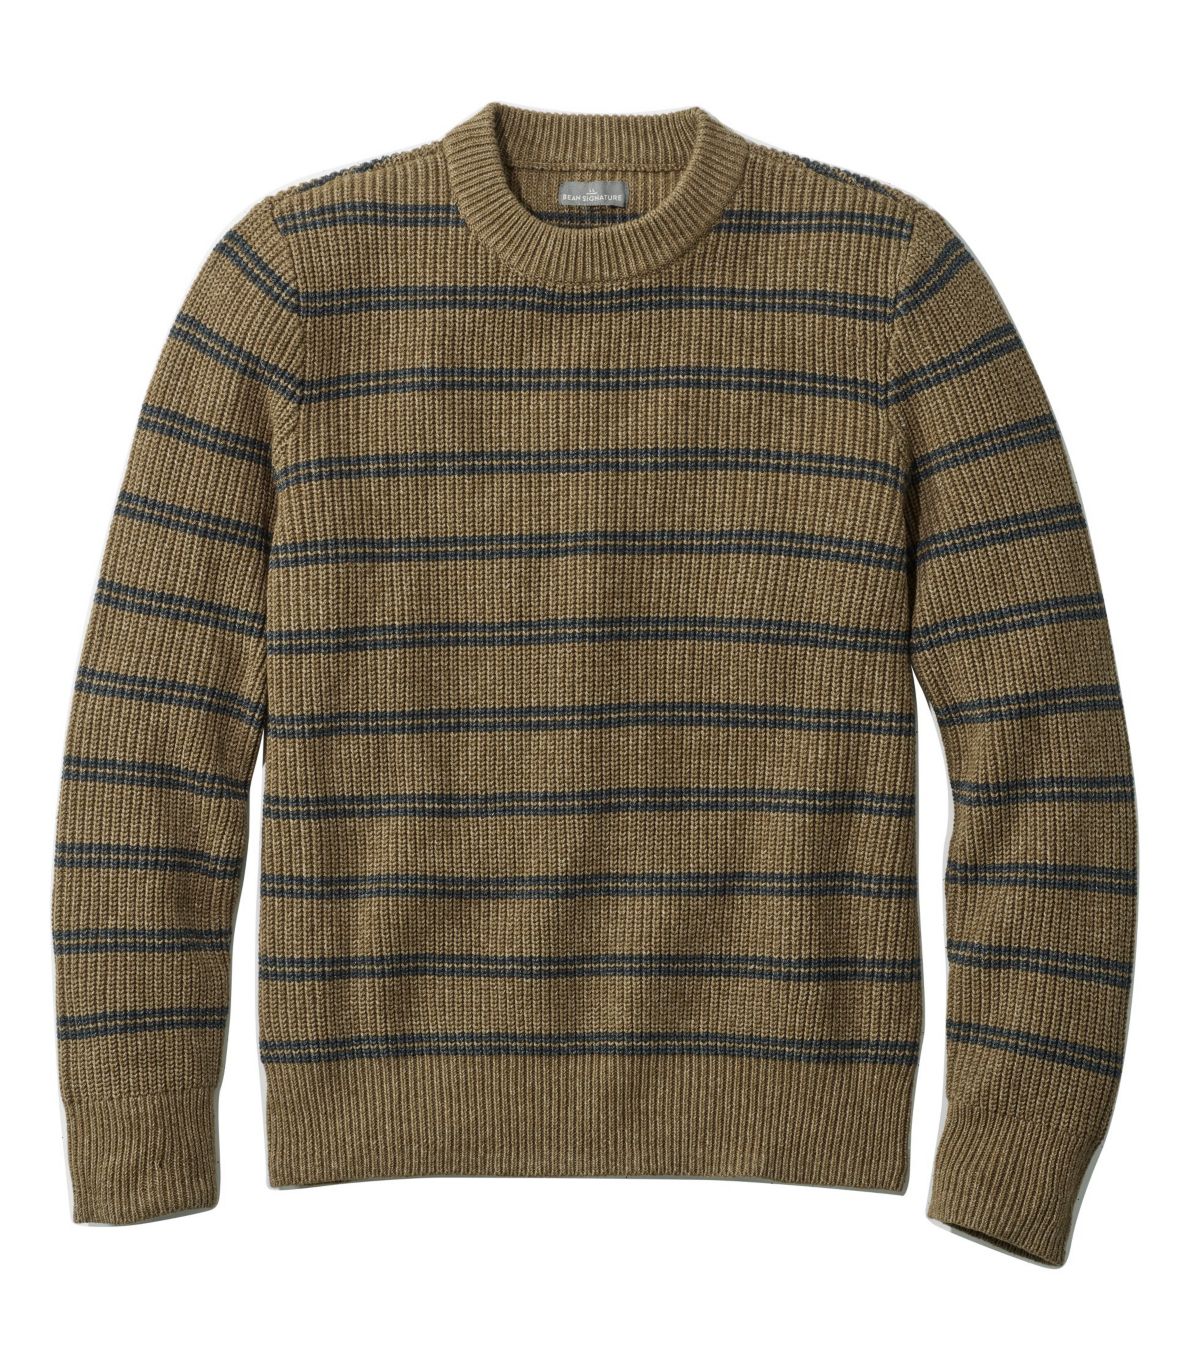 Men's Signature Shaker Stitch Sweater, Crewneck, Stripe at L.L. Bean